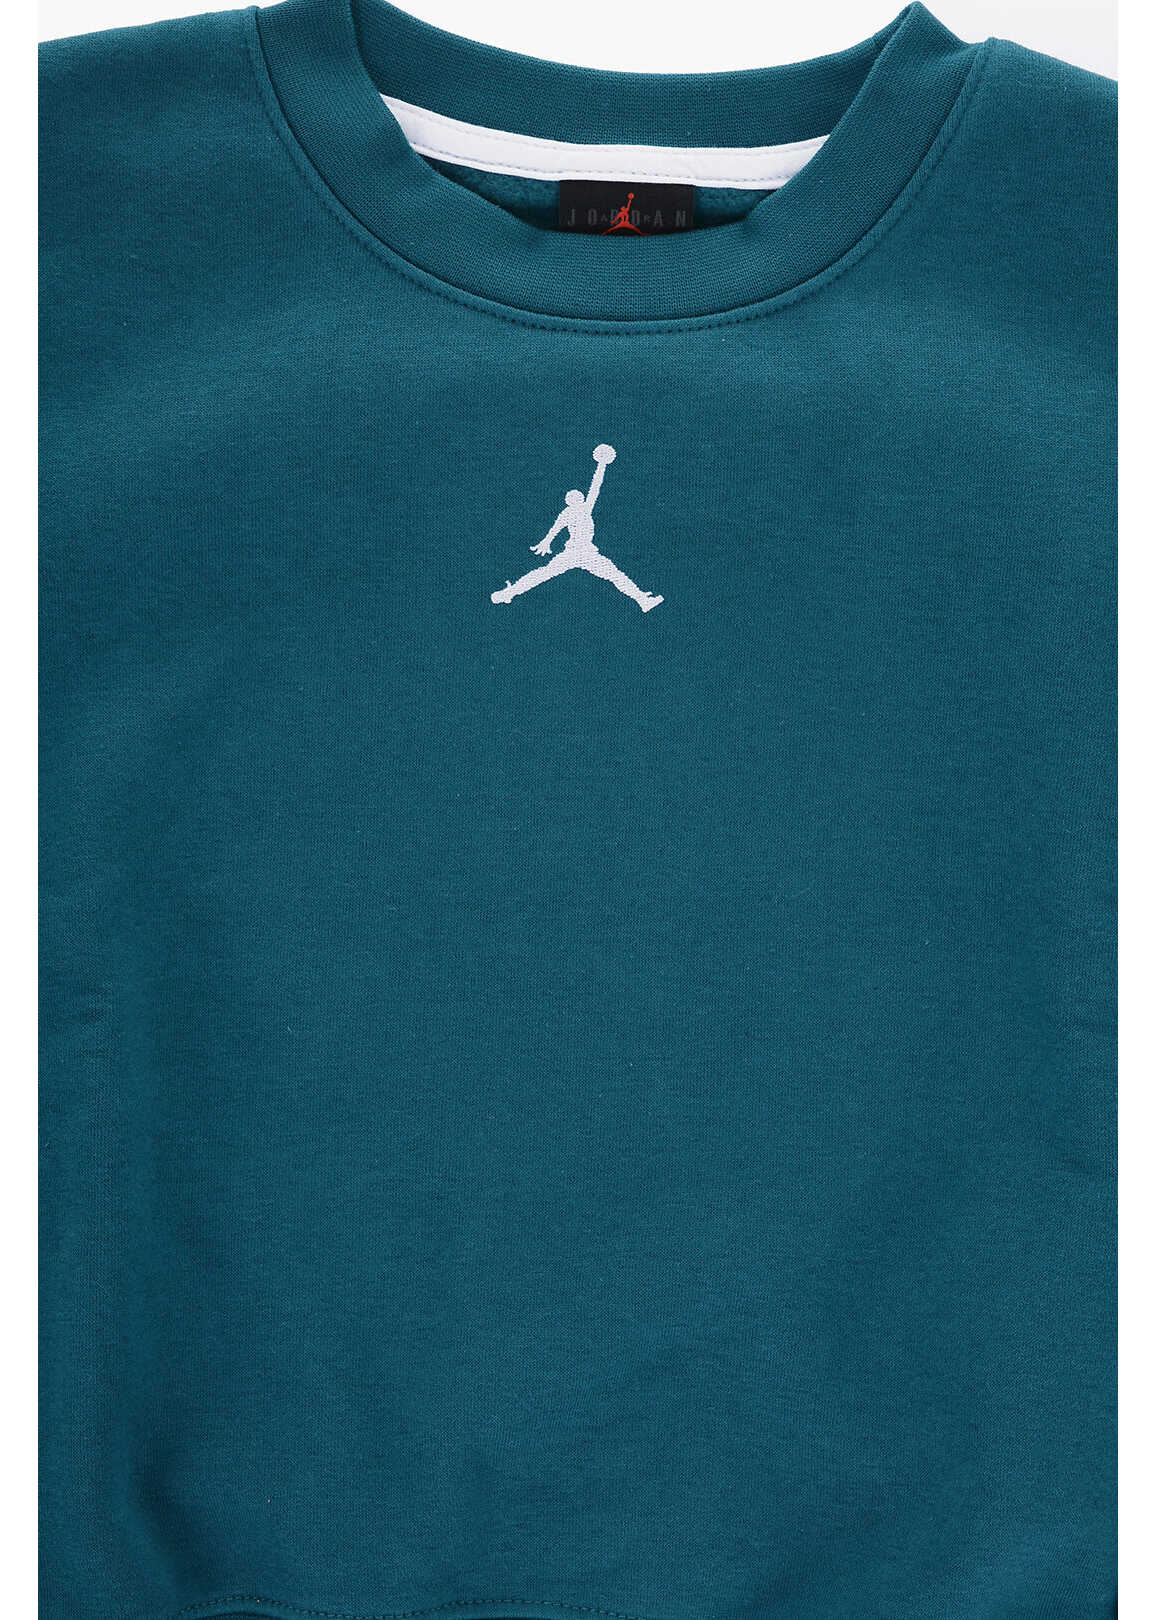 Nike Air Jordan Fleeced-Cotton Blend Icon Play Crew-Neck Sweatshi Green